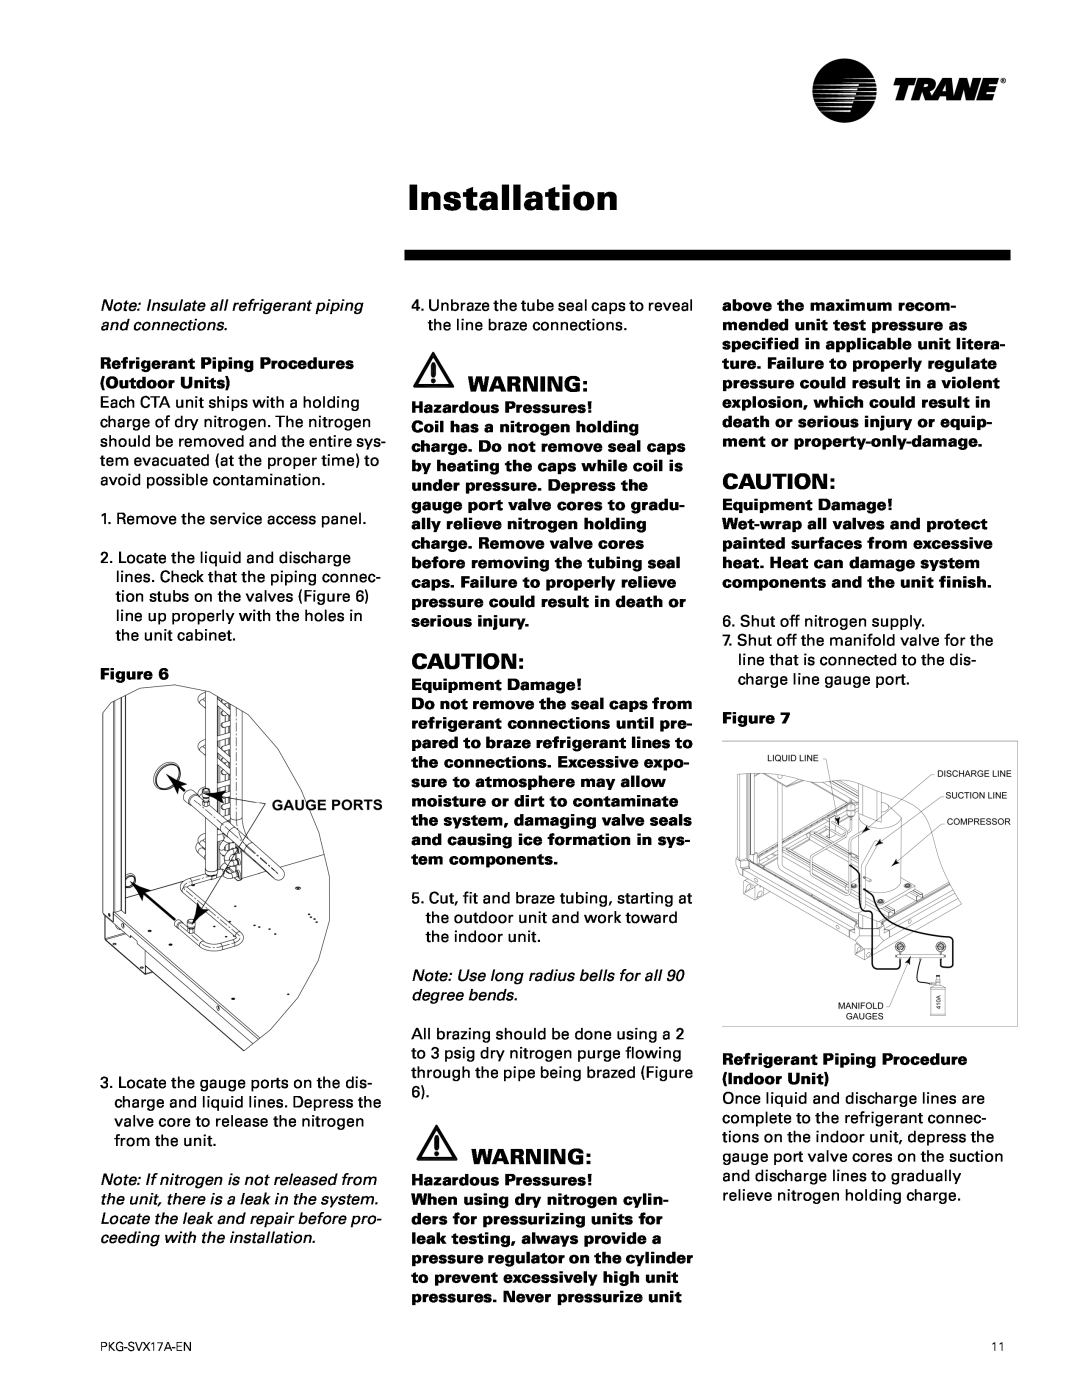 Trane PKG-SVX17A-EN manual Installation, Refrigerant Piping Procedures Outdoor Units 